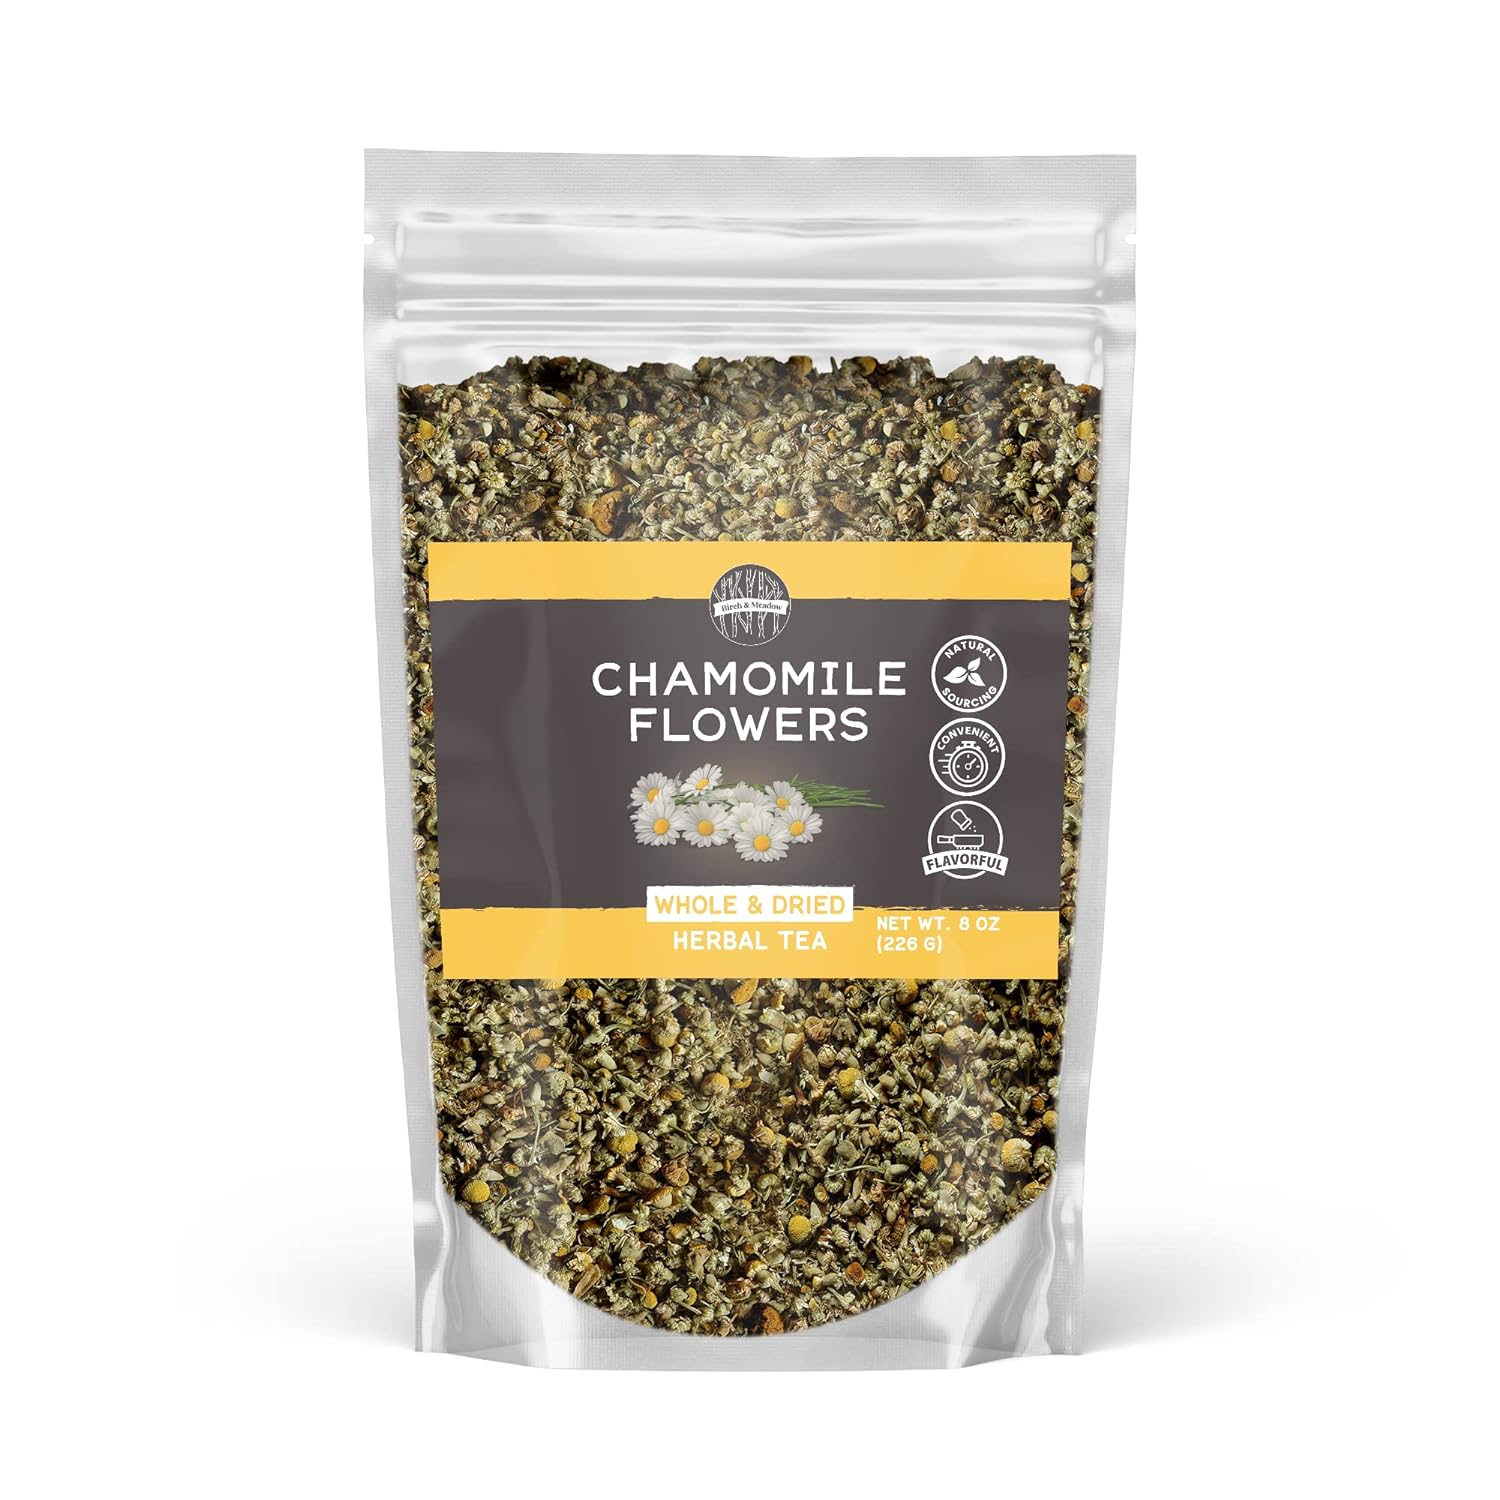 Birch & Meadow Chamomile Flowers, 8 oz, Whole & Dried, Herbal Tea